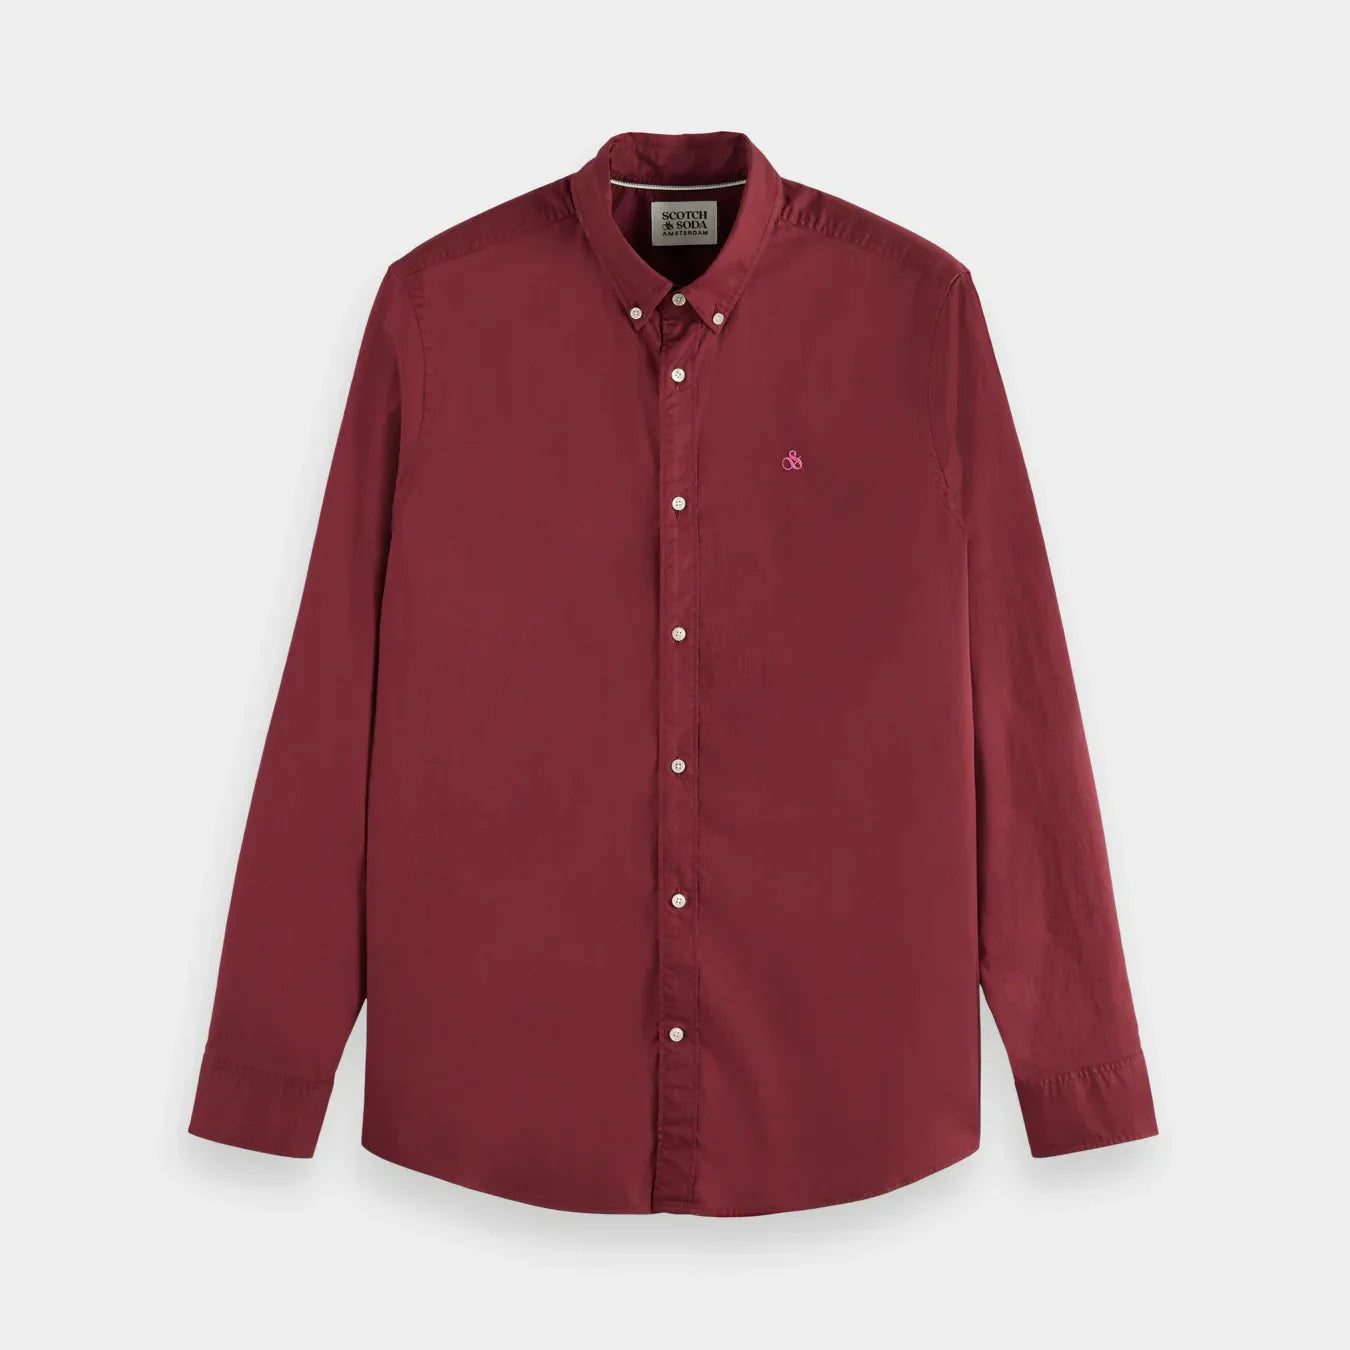 'Scotch & Soda Solid Oxford Button-Down Shirt' in 'Merlot' colour